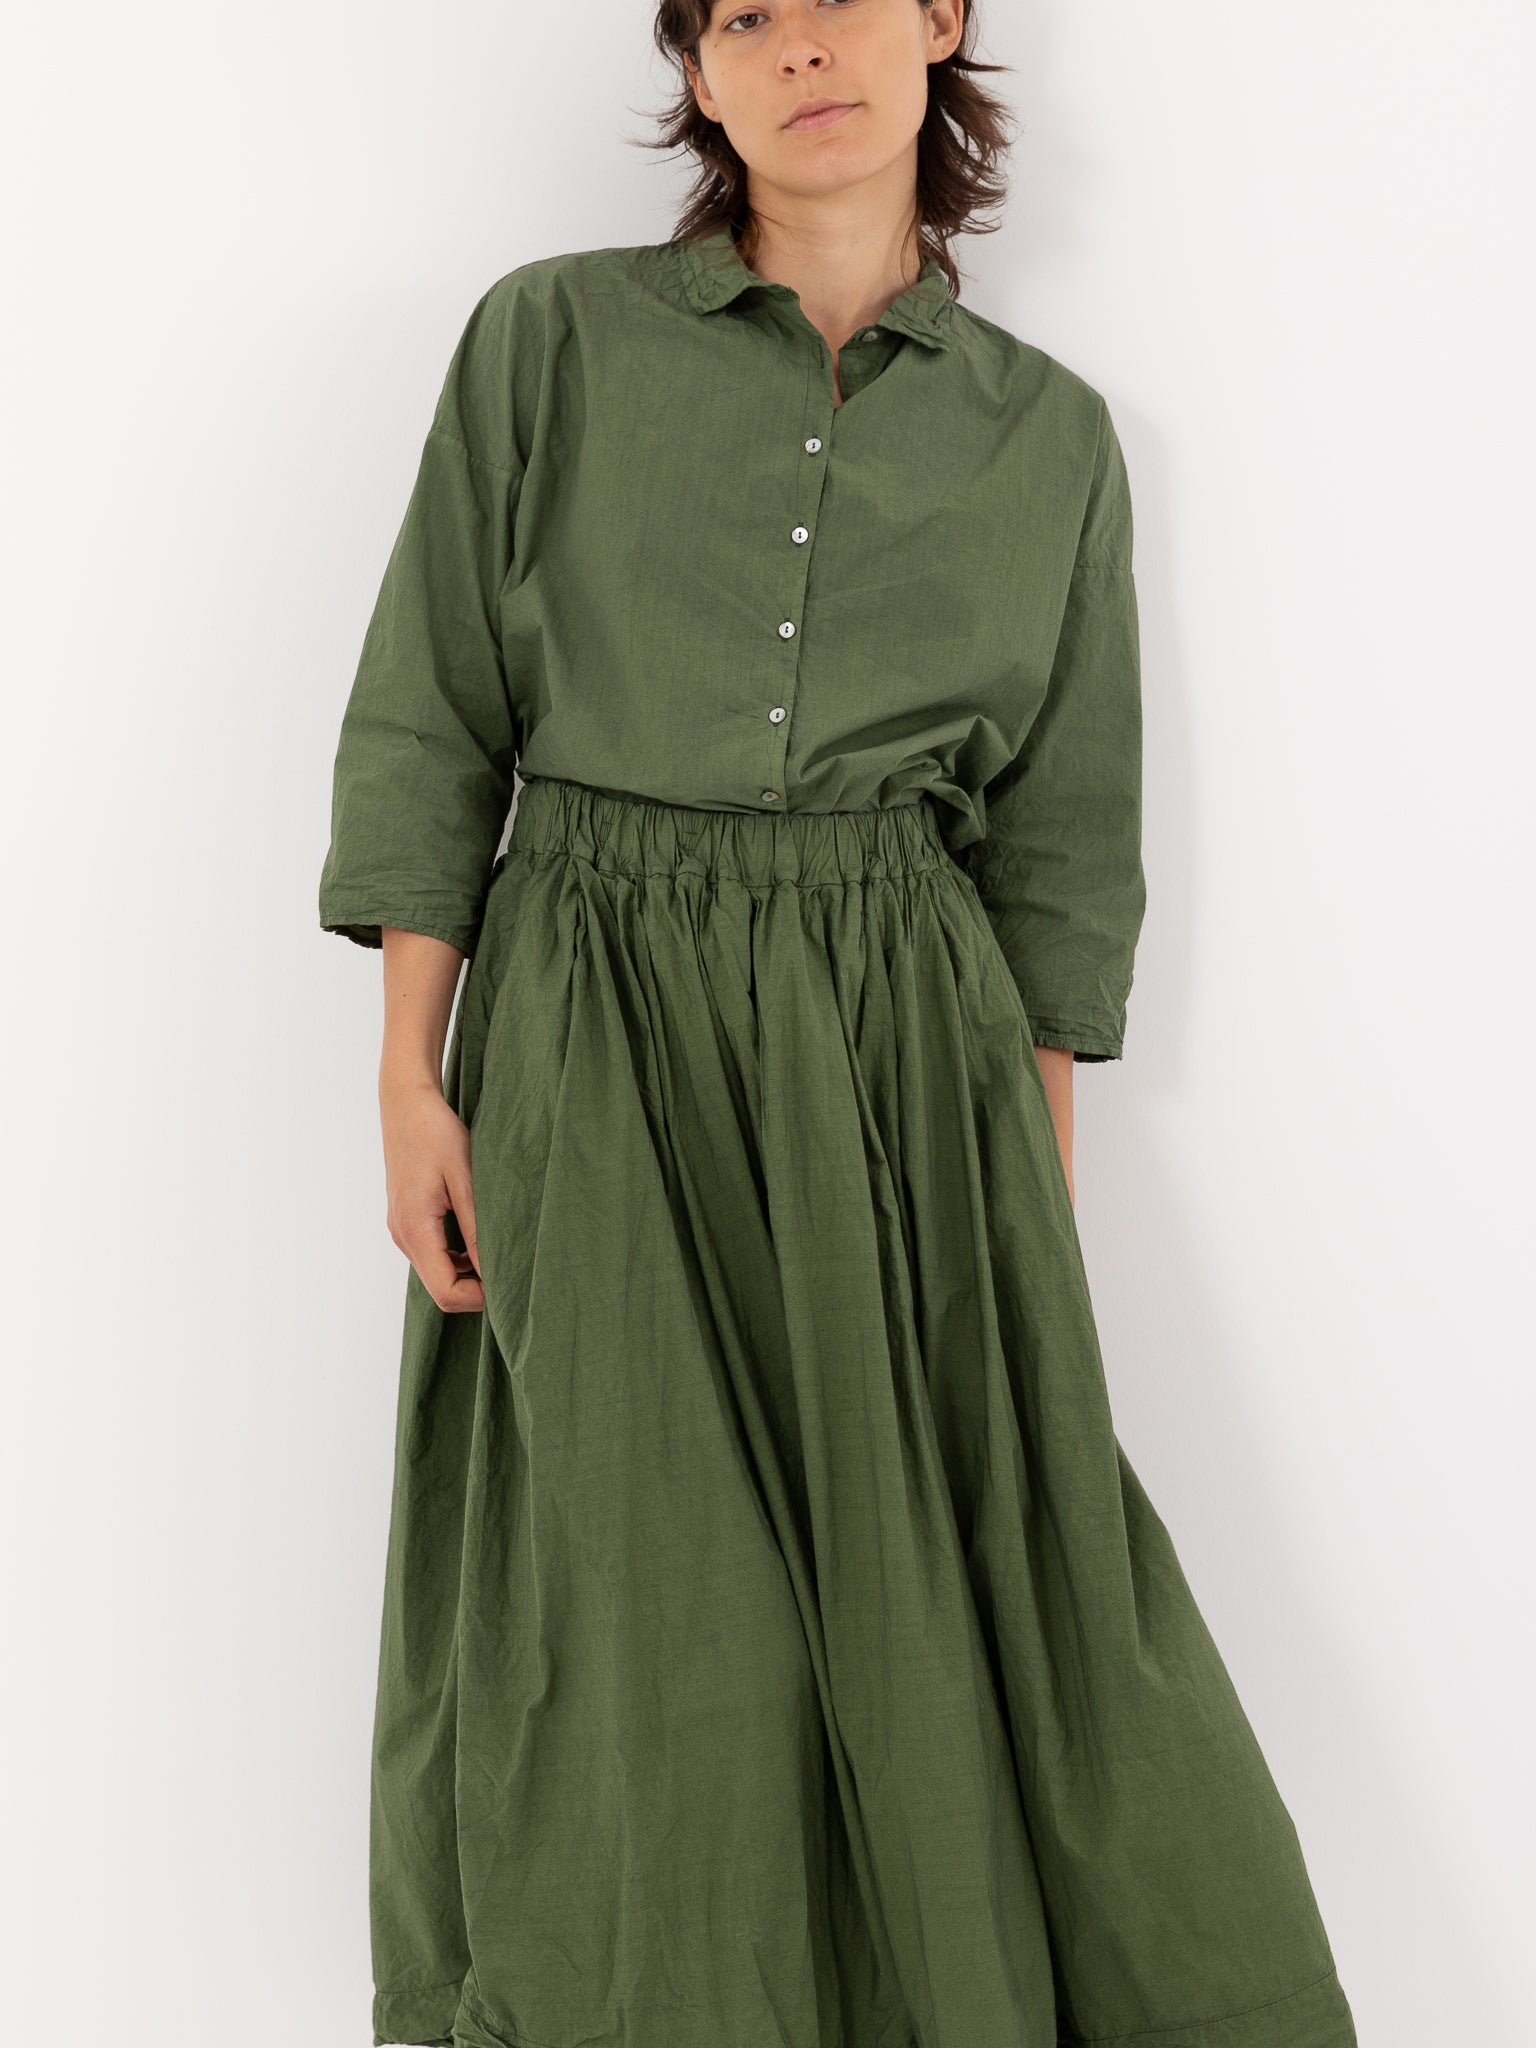 Album Di Famiglia Pleat Skirt, Green - Worthwhile, Inc.